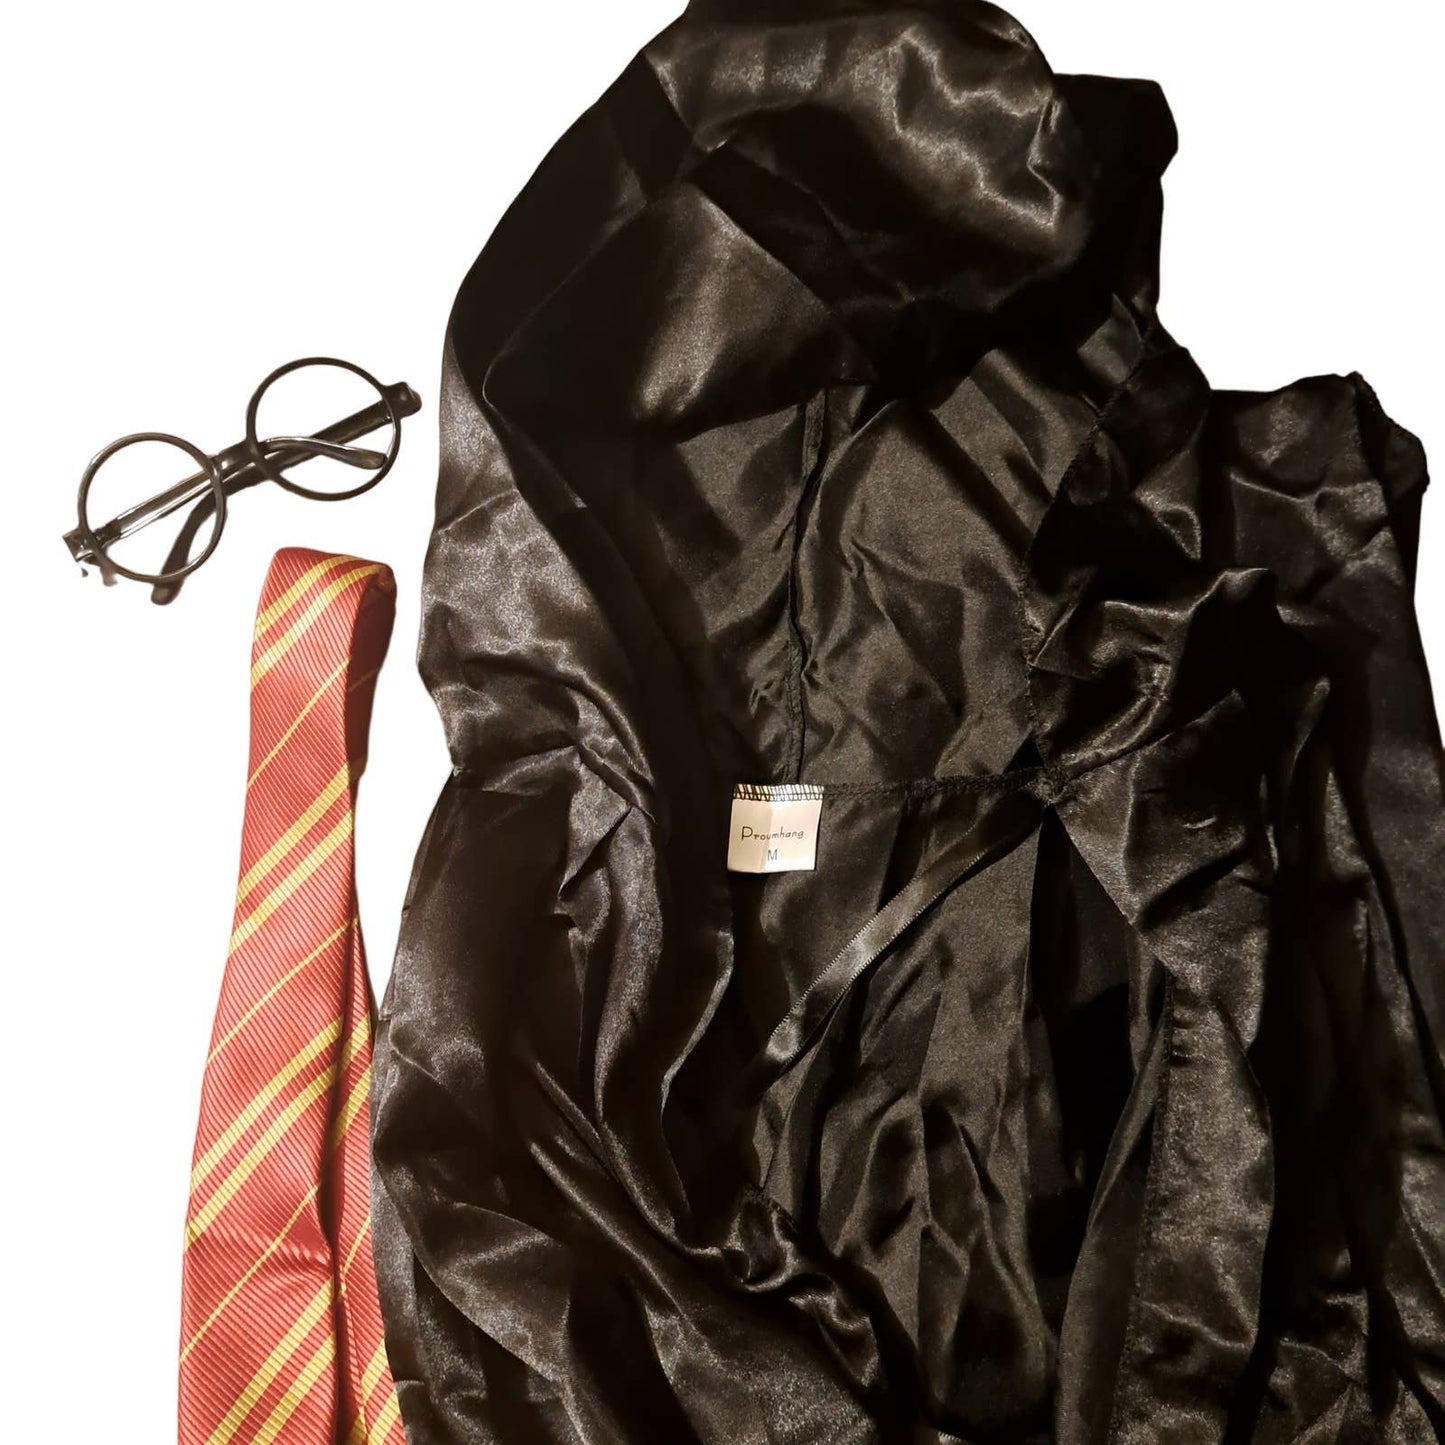 Halloween Sale! Harry Potter - Plain satin Black Cape HOGWARTS REd tie & Glasses